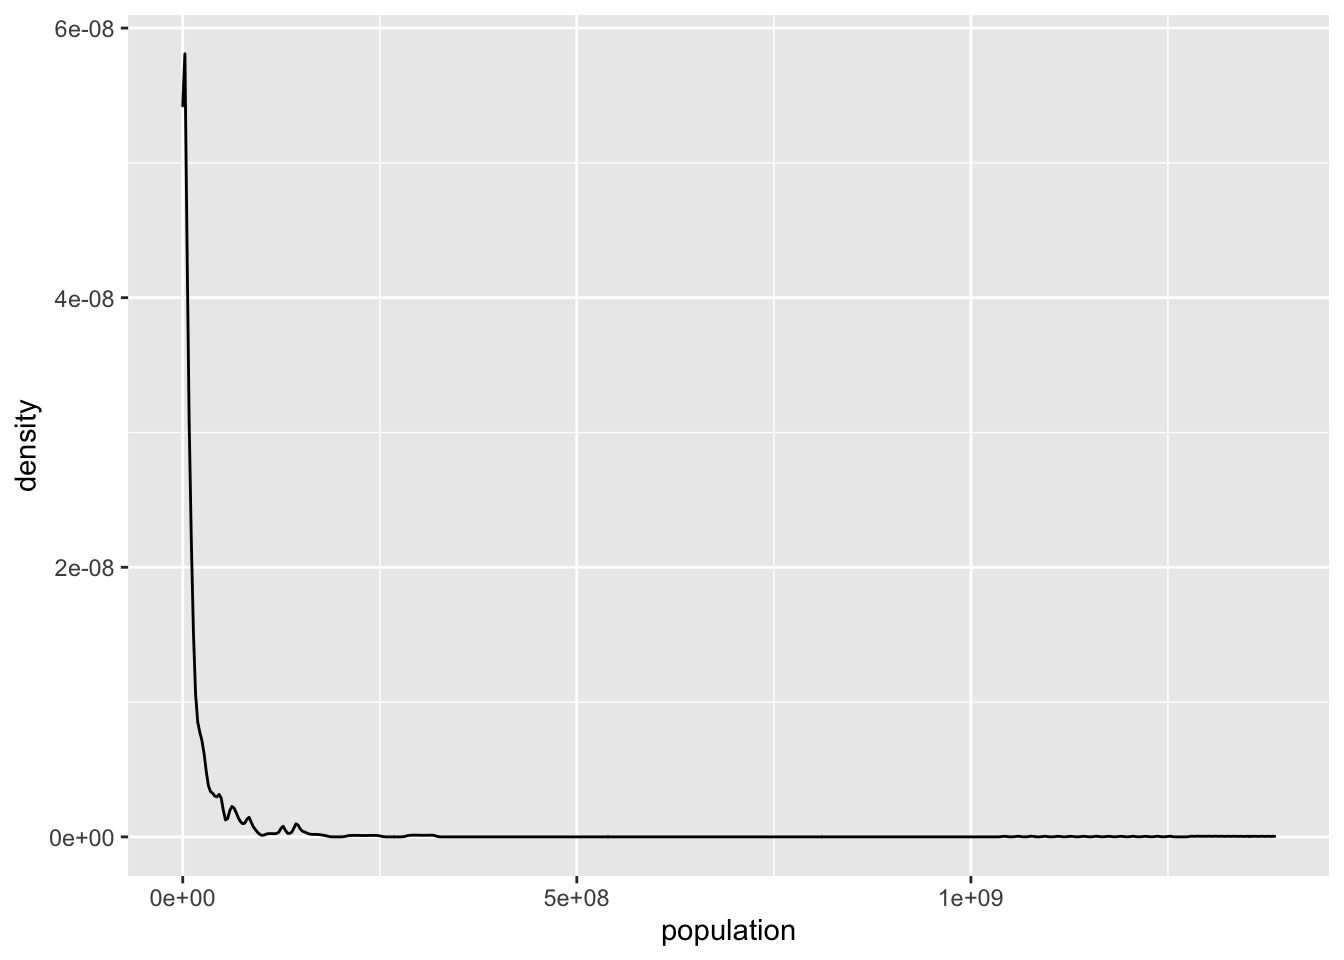 Population distribution